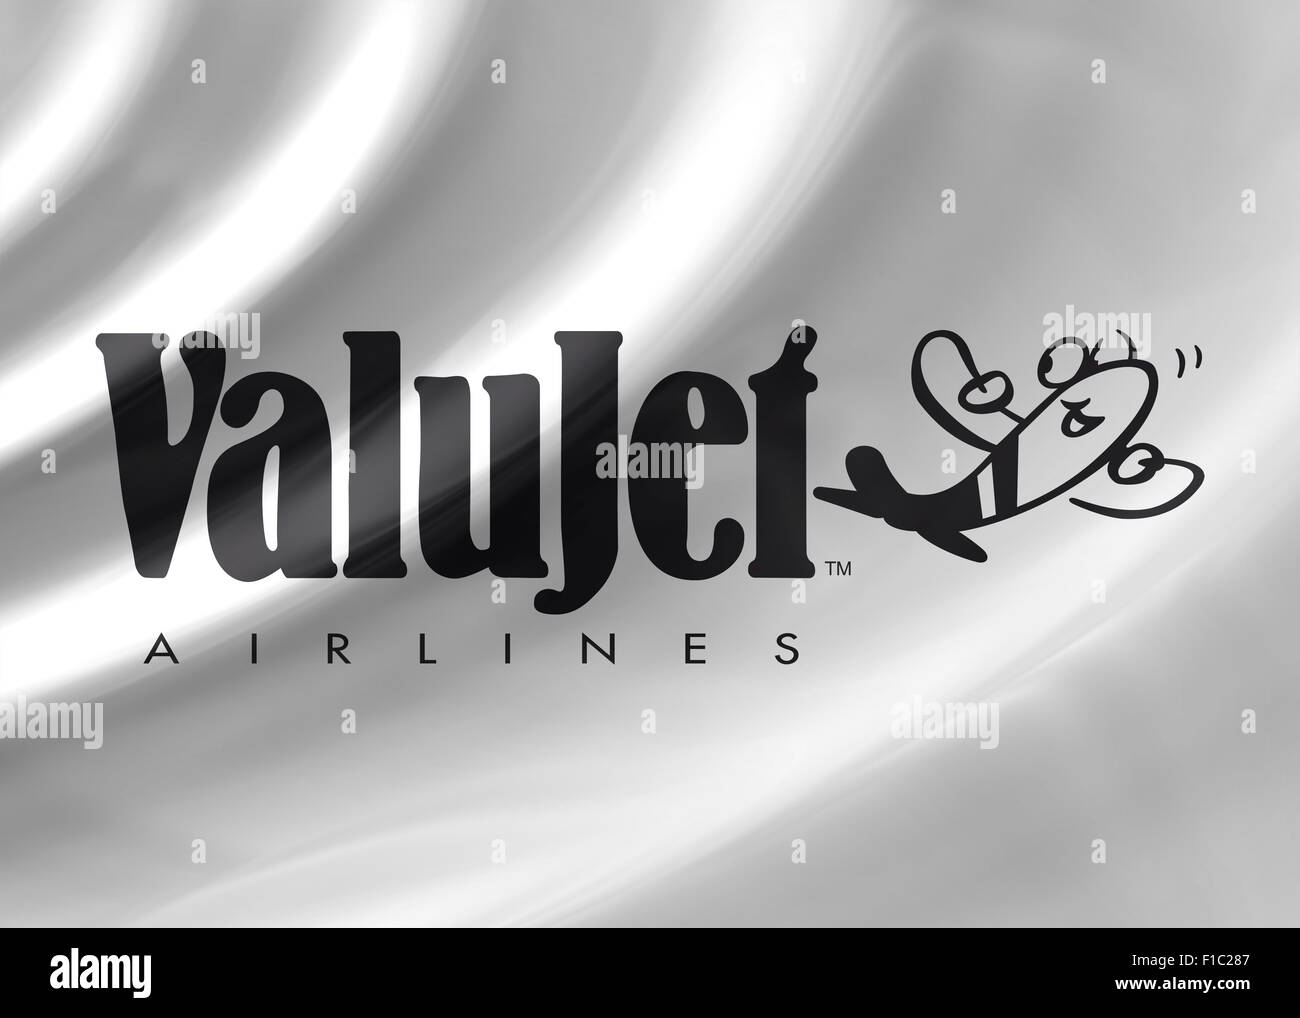 Valujet Airlines logo icon flag symbol emblem sign Stock Photo